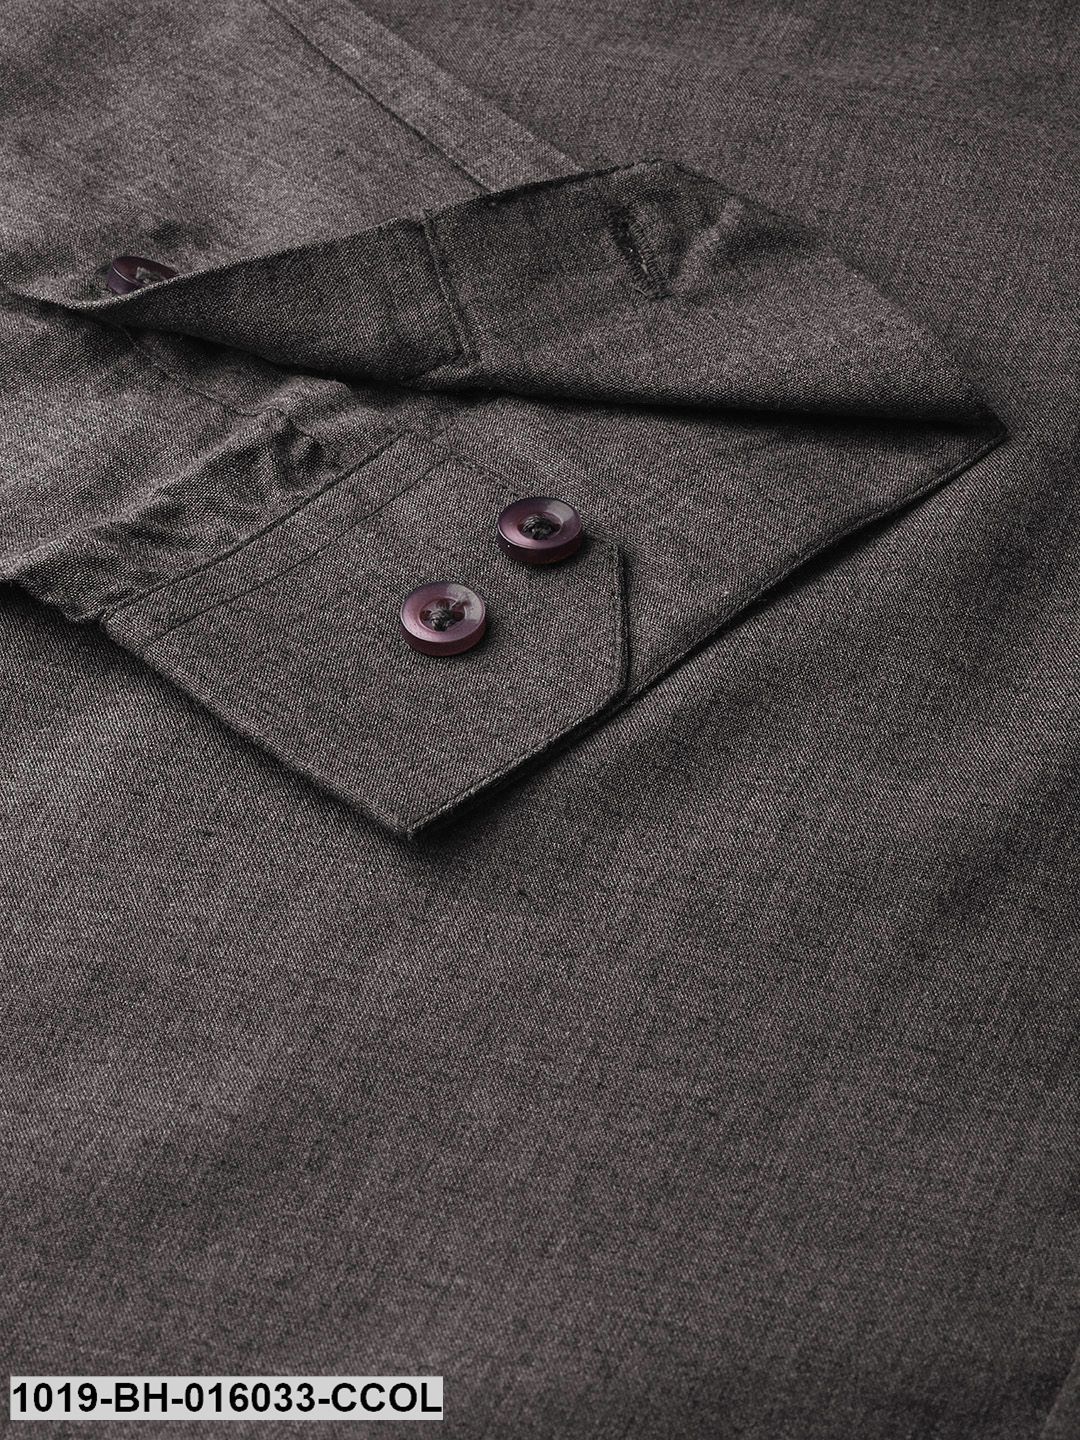 Men's Cotton Charcoal Grey Casual Shirt - Sojanya